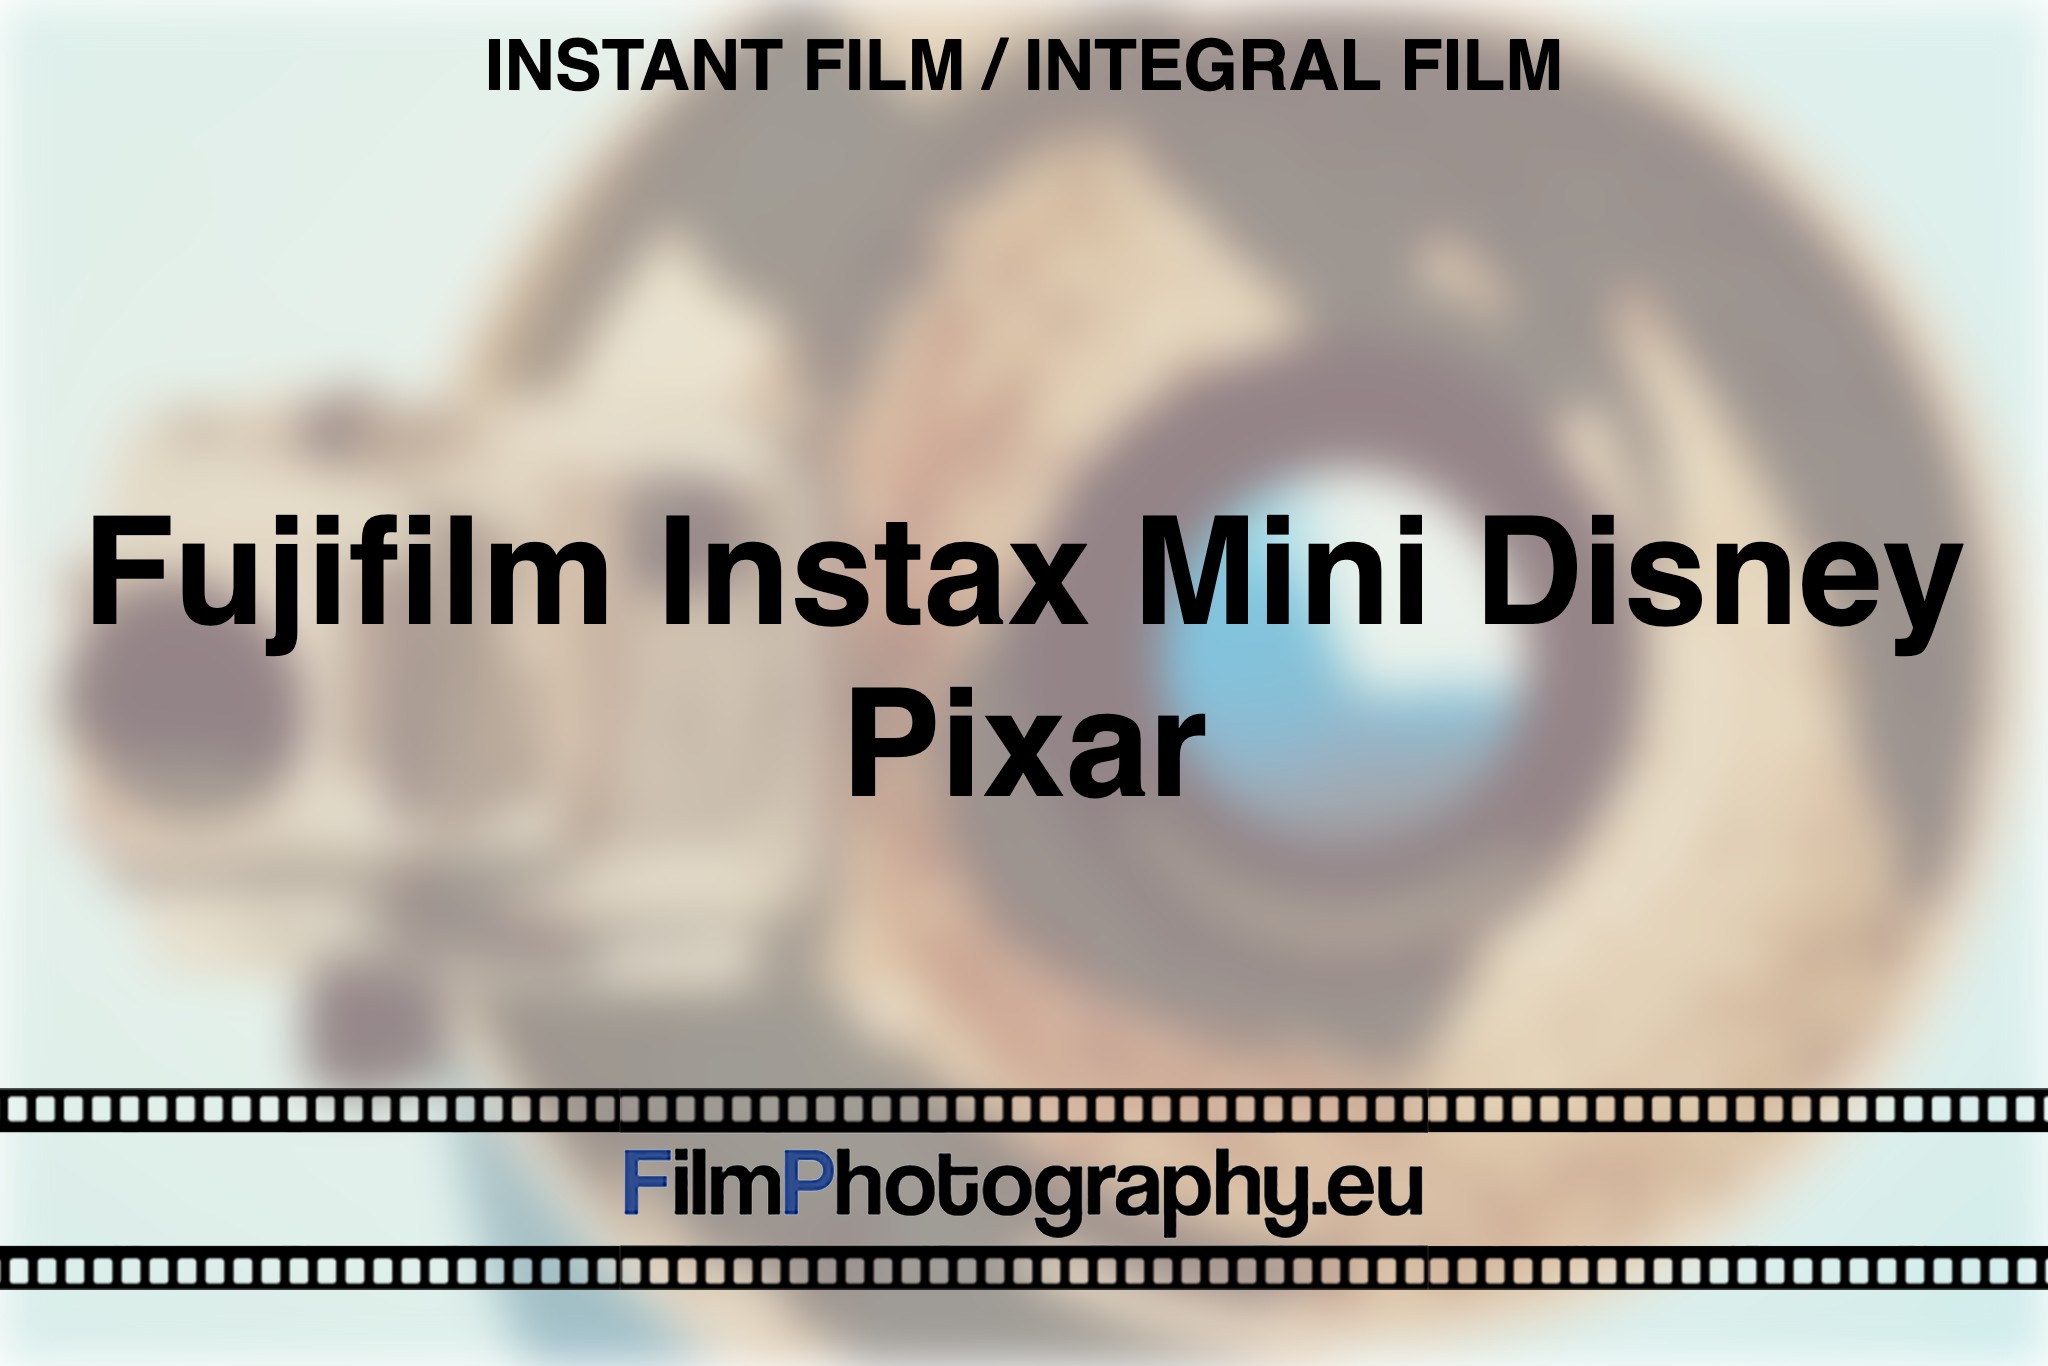 fujifilm-instax-mini-disney-pixar-instant-film-integral-film-bnv